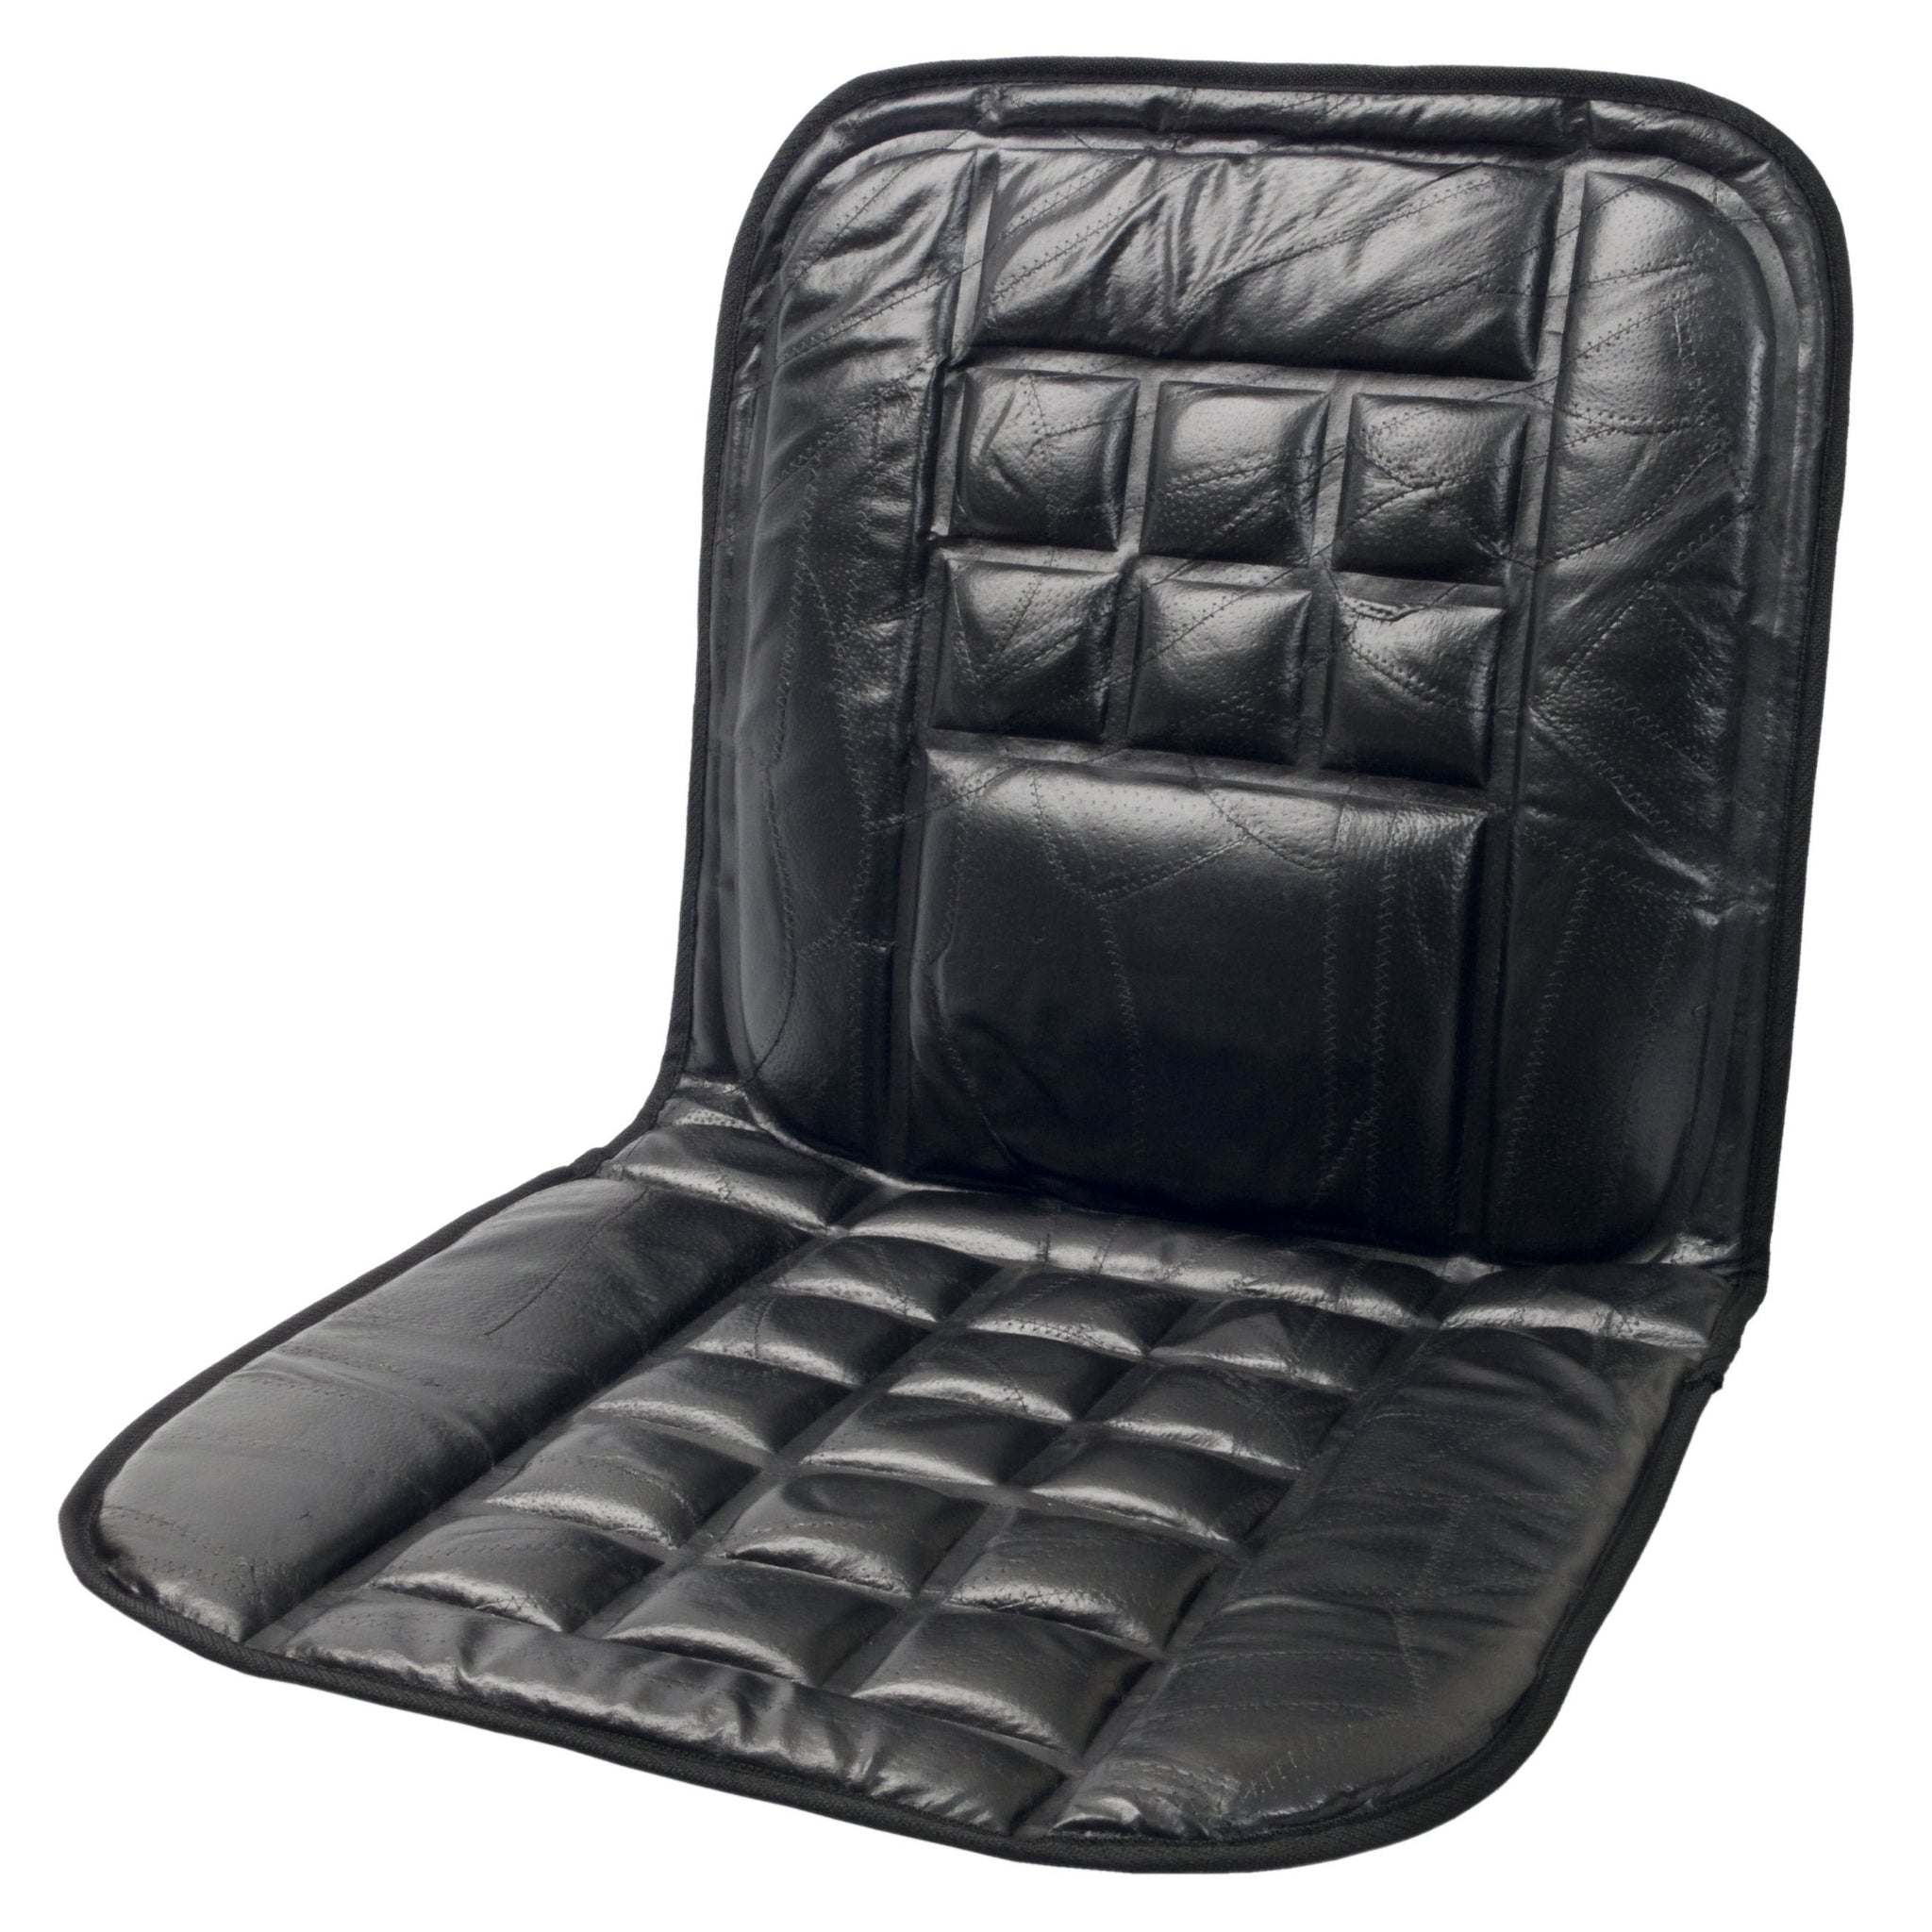 Wagan Leather Lumber Support Cushion 9615, Size: 38L x 18.5W x 0.3H, Black